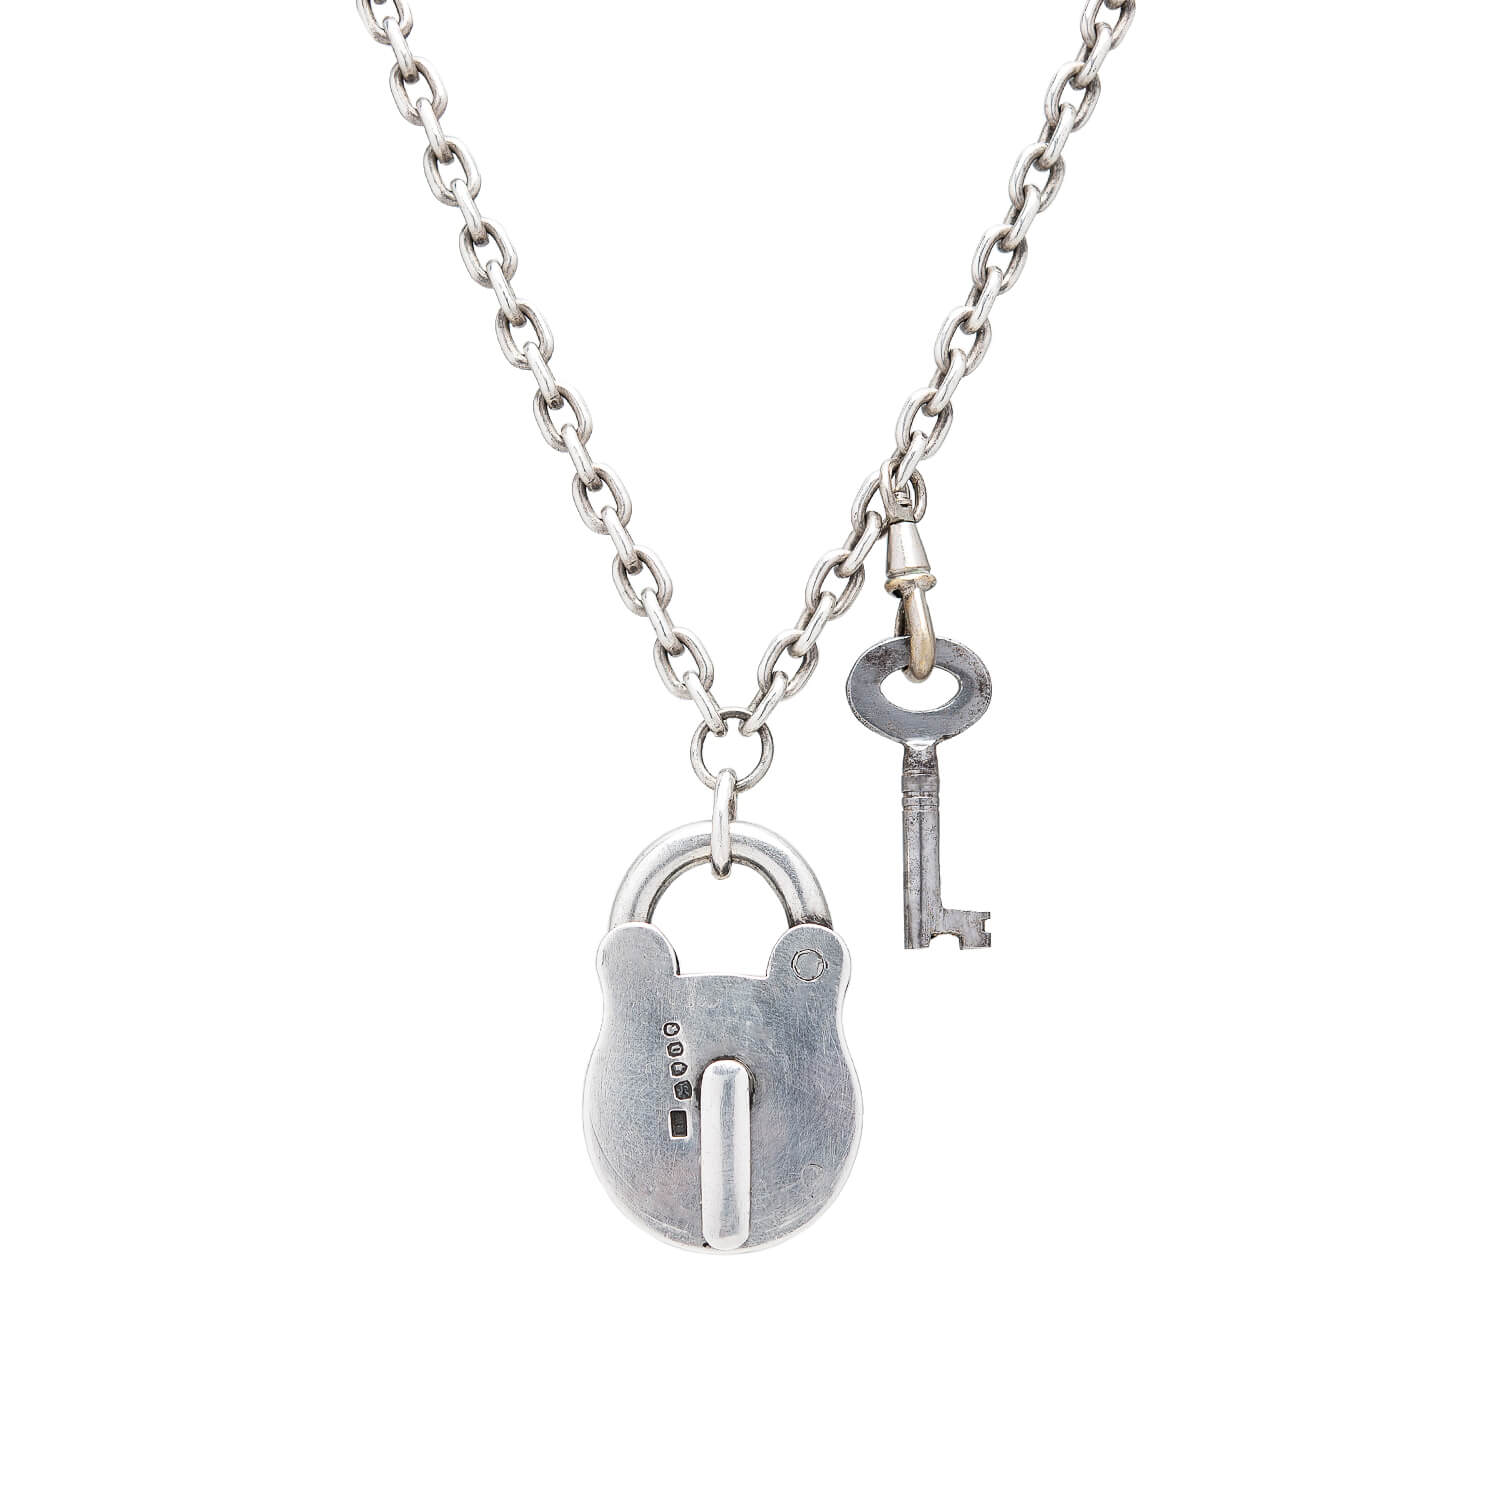 Silver Lock and Key Stud Earrings Silver Lock and Key -  Israel